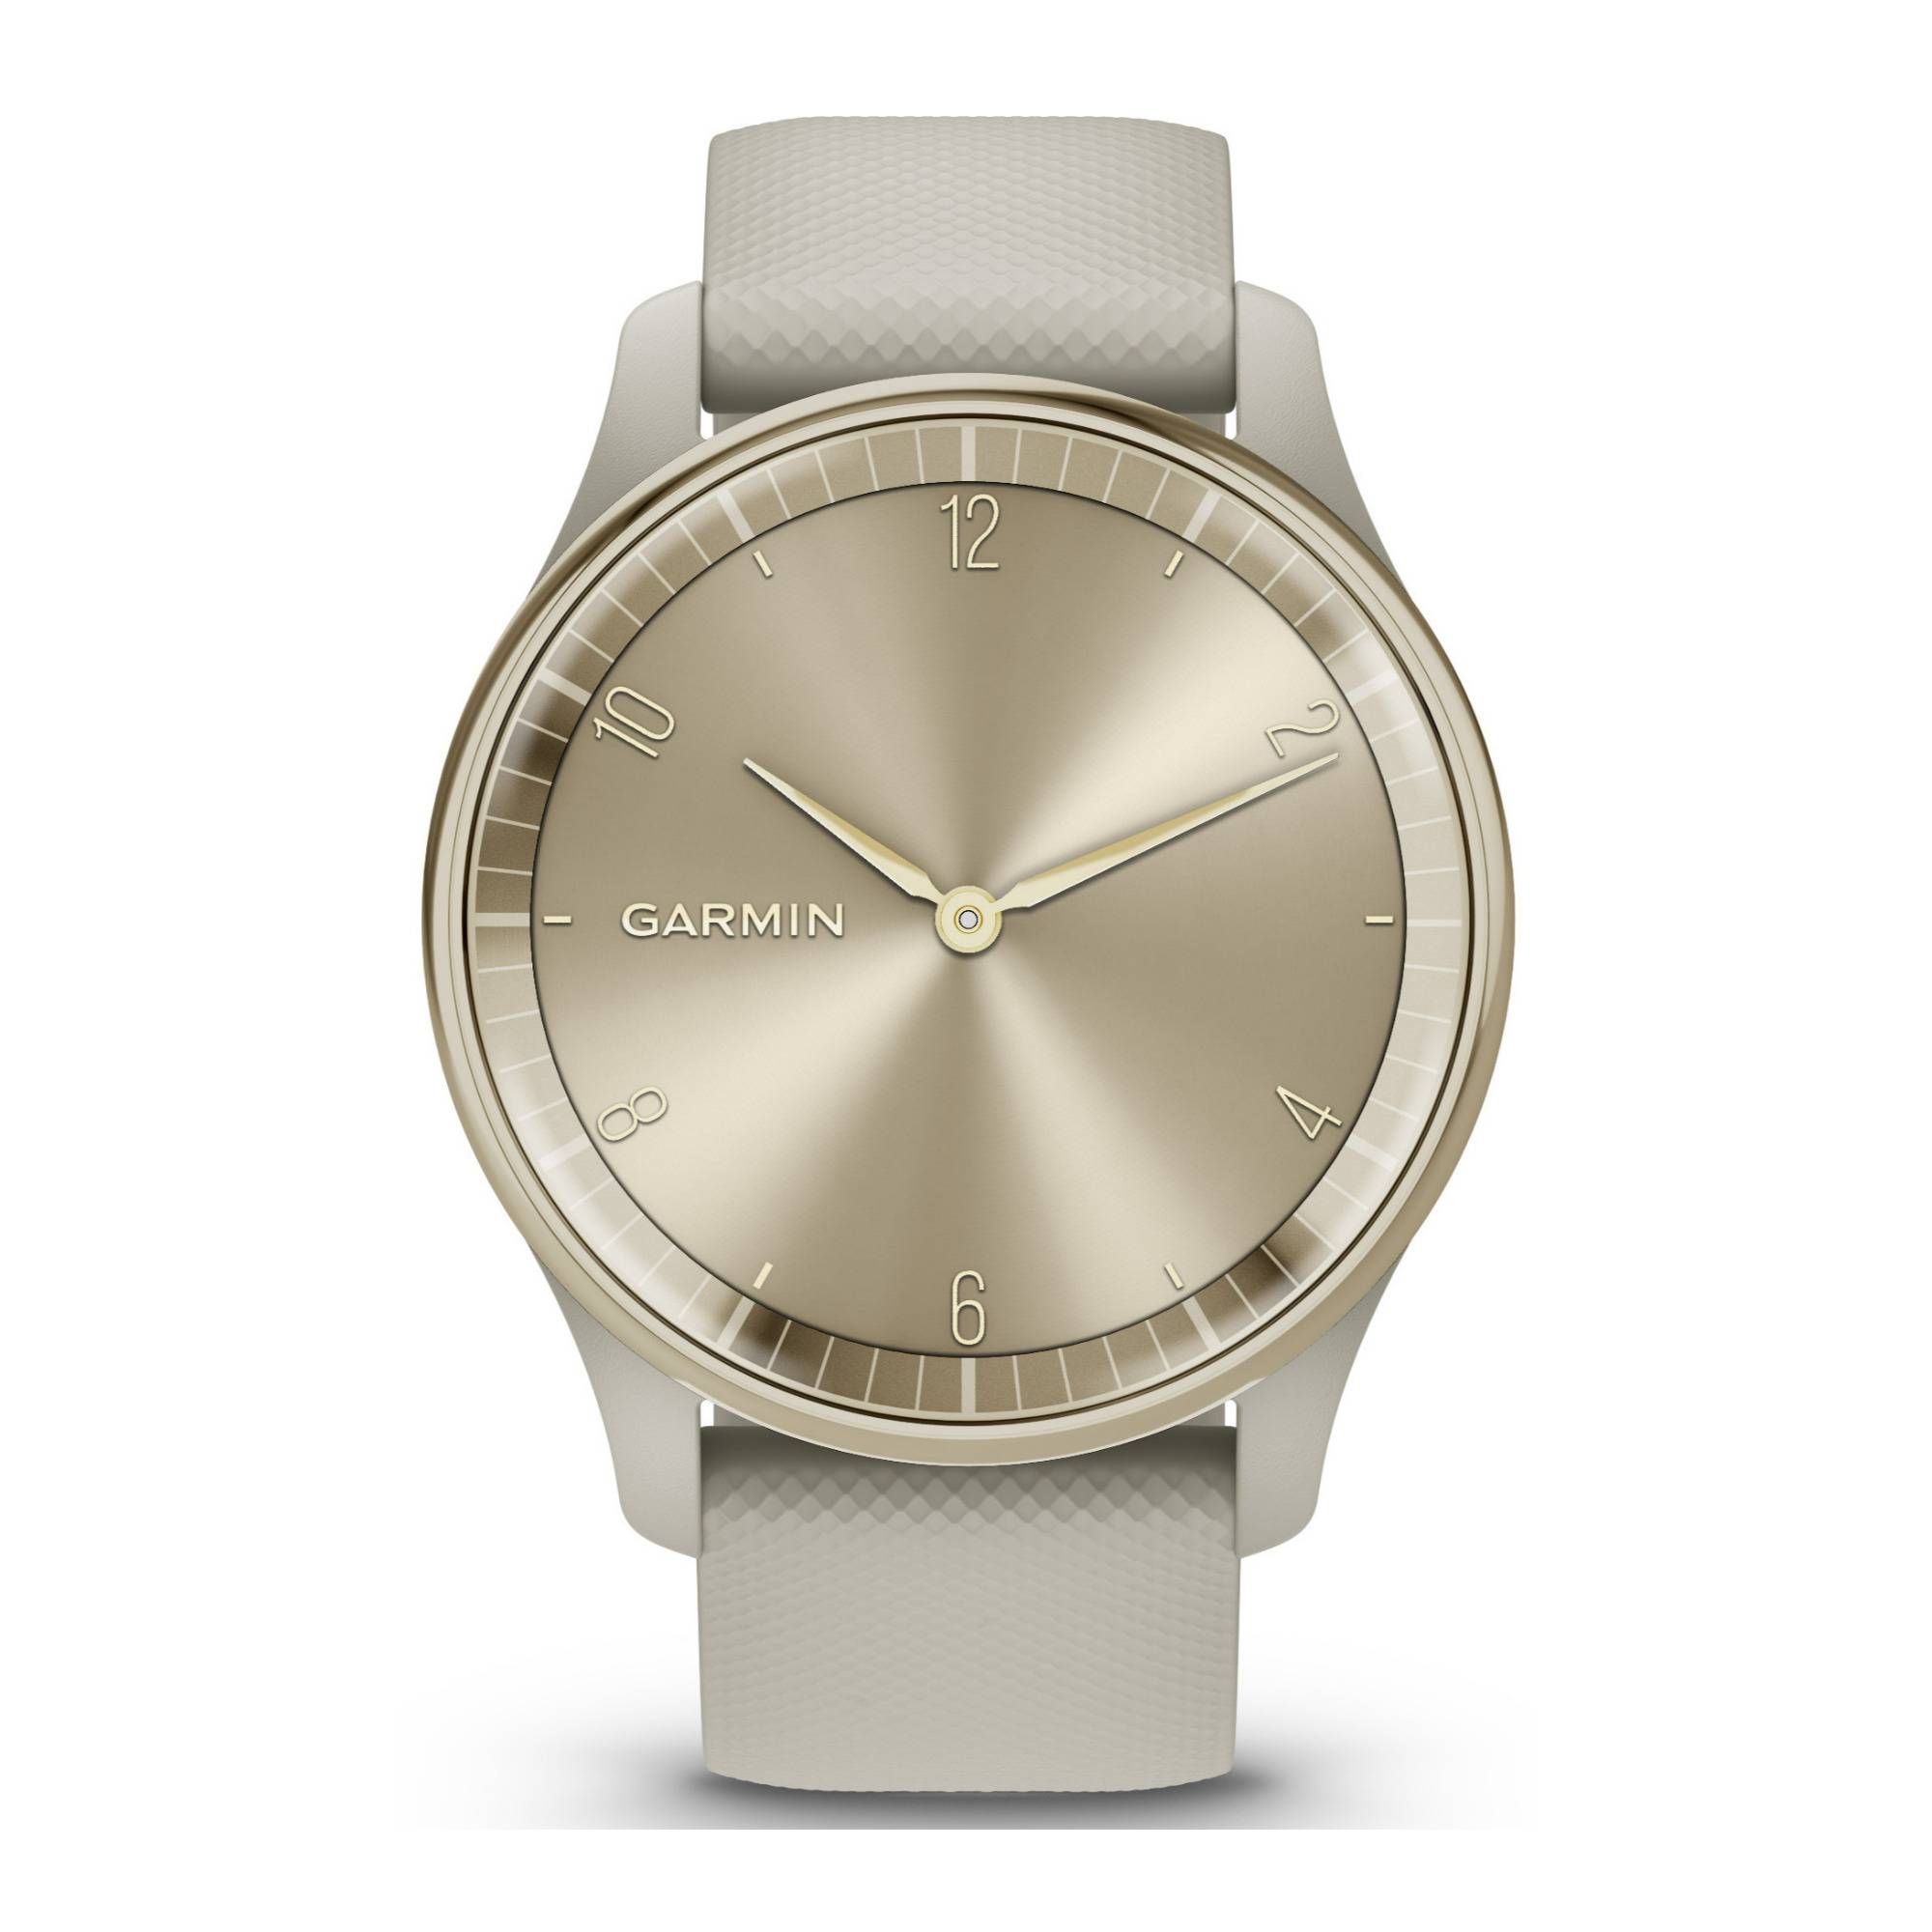 Garmin Vívomove Trend Hybrid Smartwatch with Silicon Band (Cream Gold Stainless Steel Bezel)